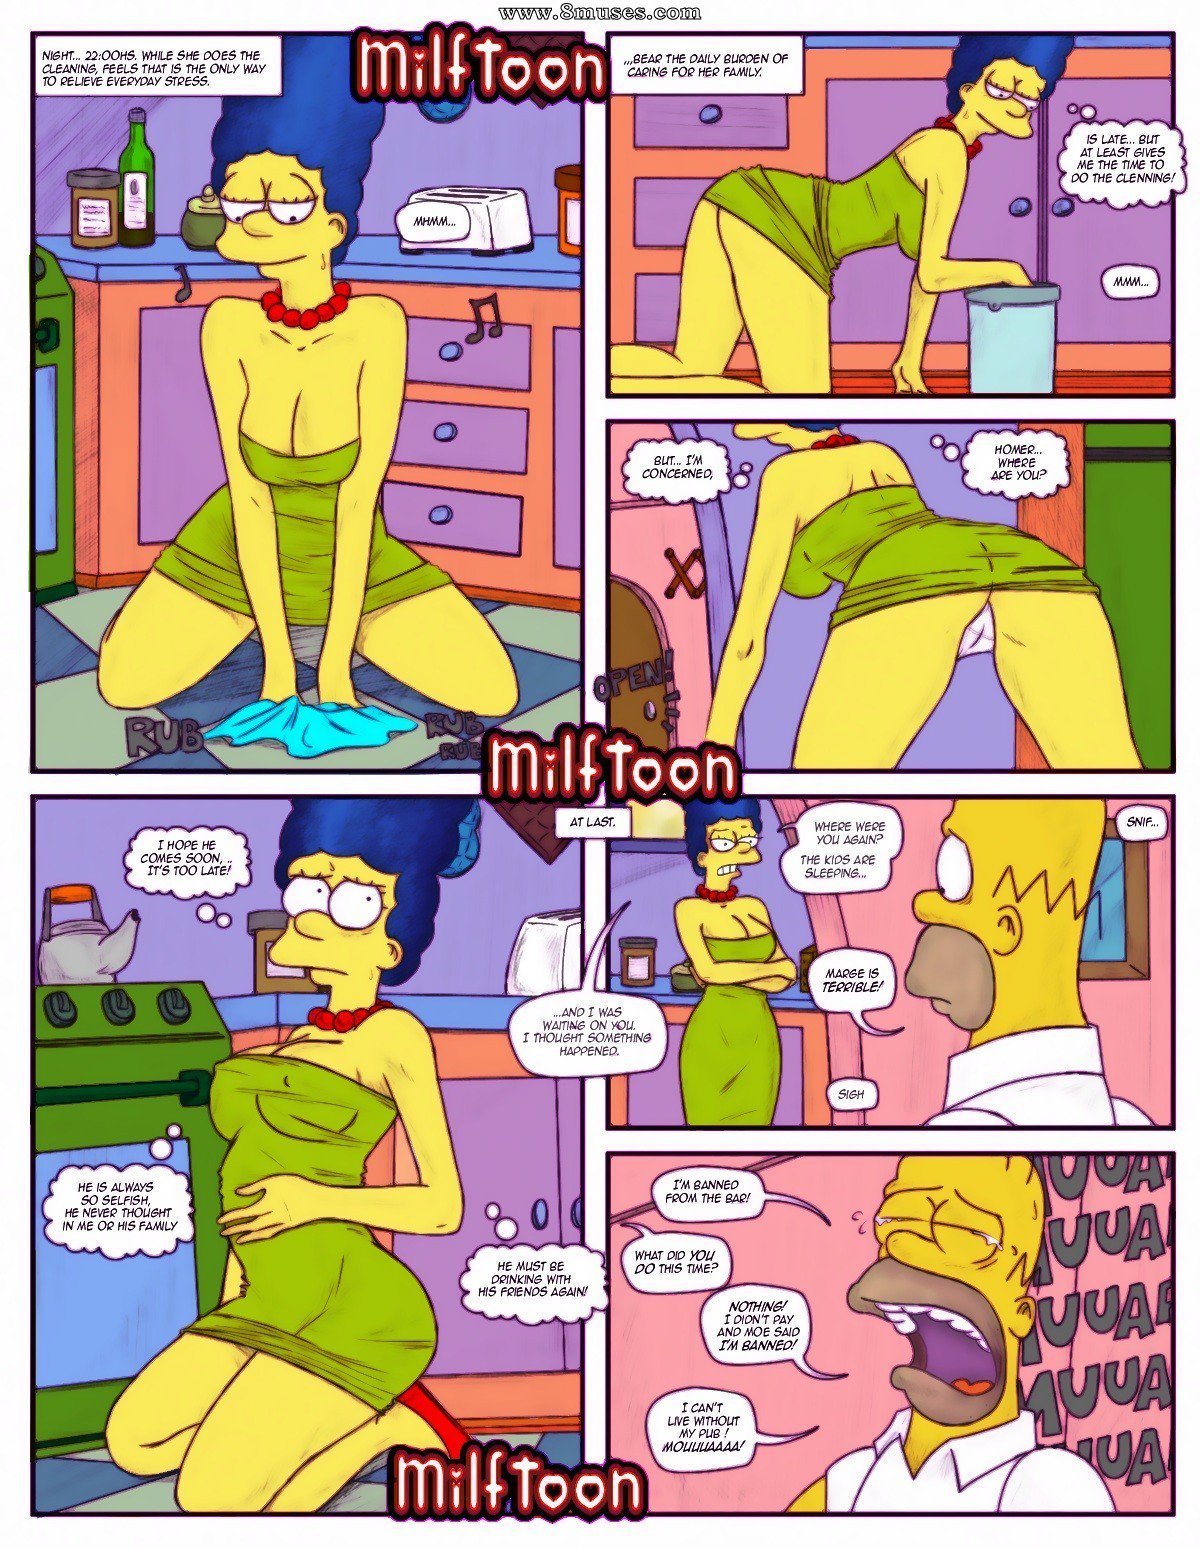 Simpson Cartoon Porn Family - The Simpsons Porn: Family incest - Milftoon Comics